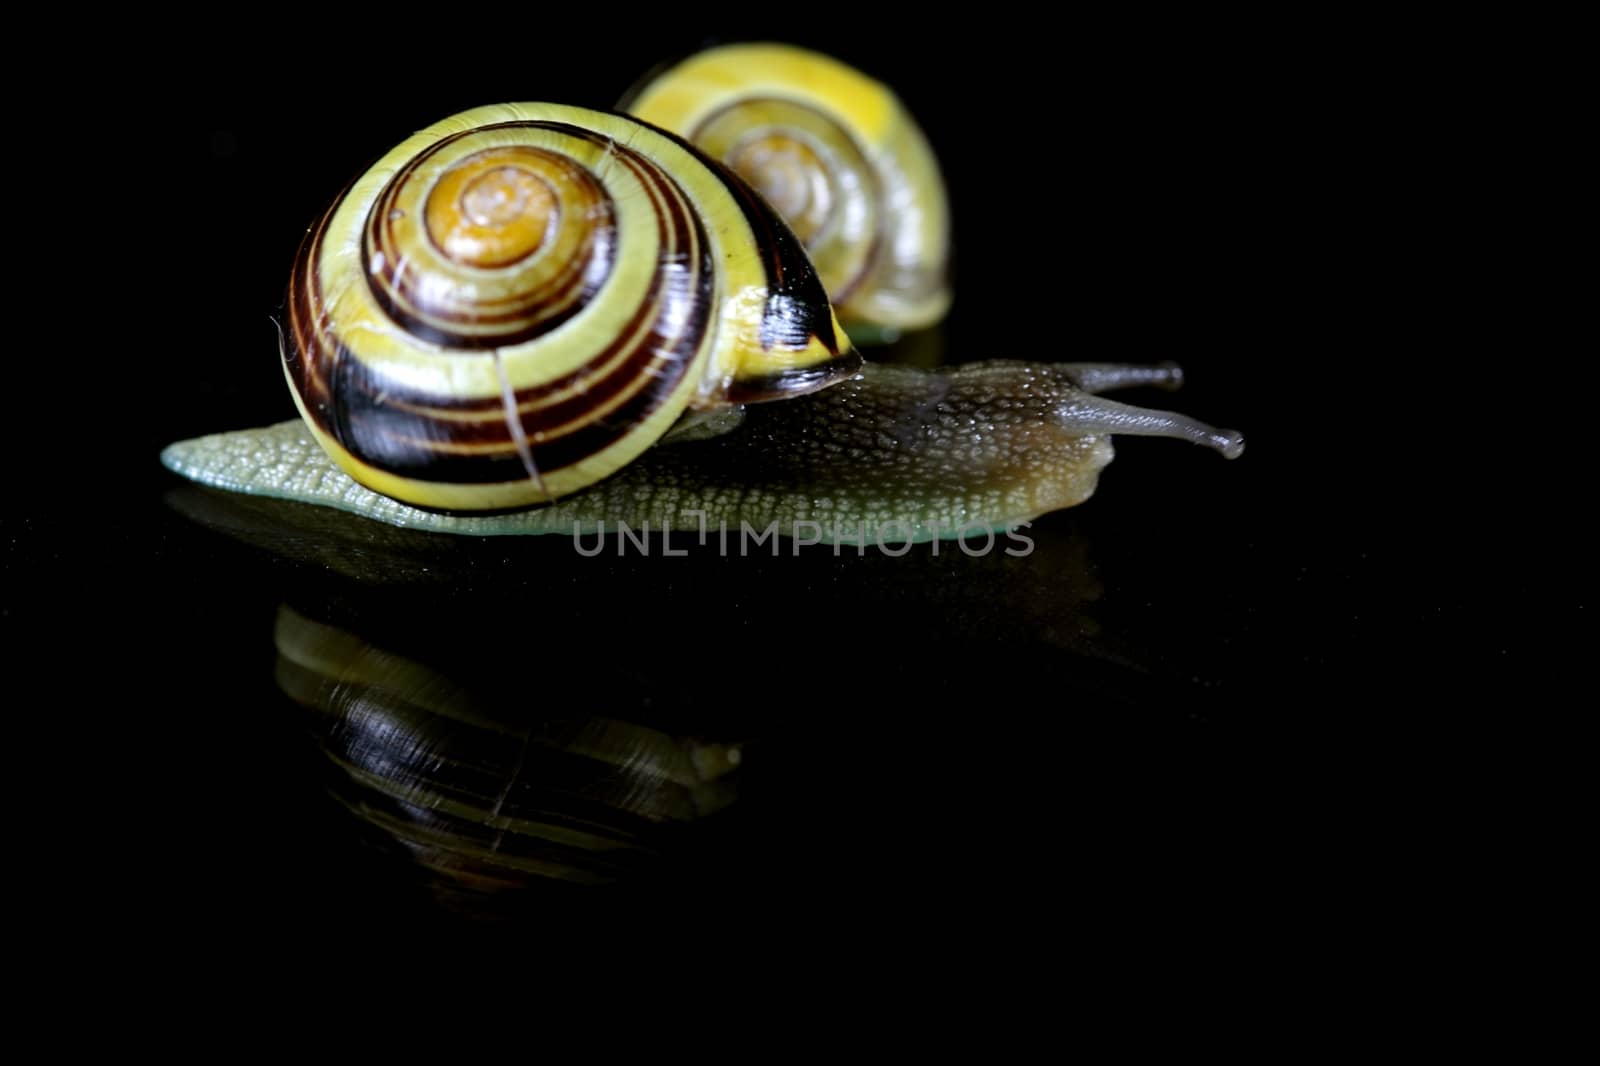 Snail on a mirror